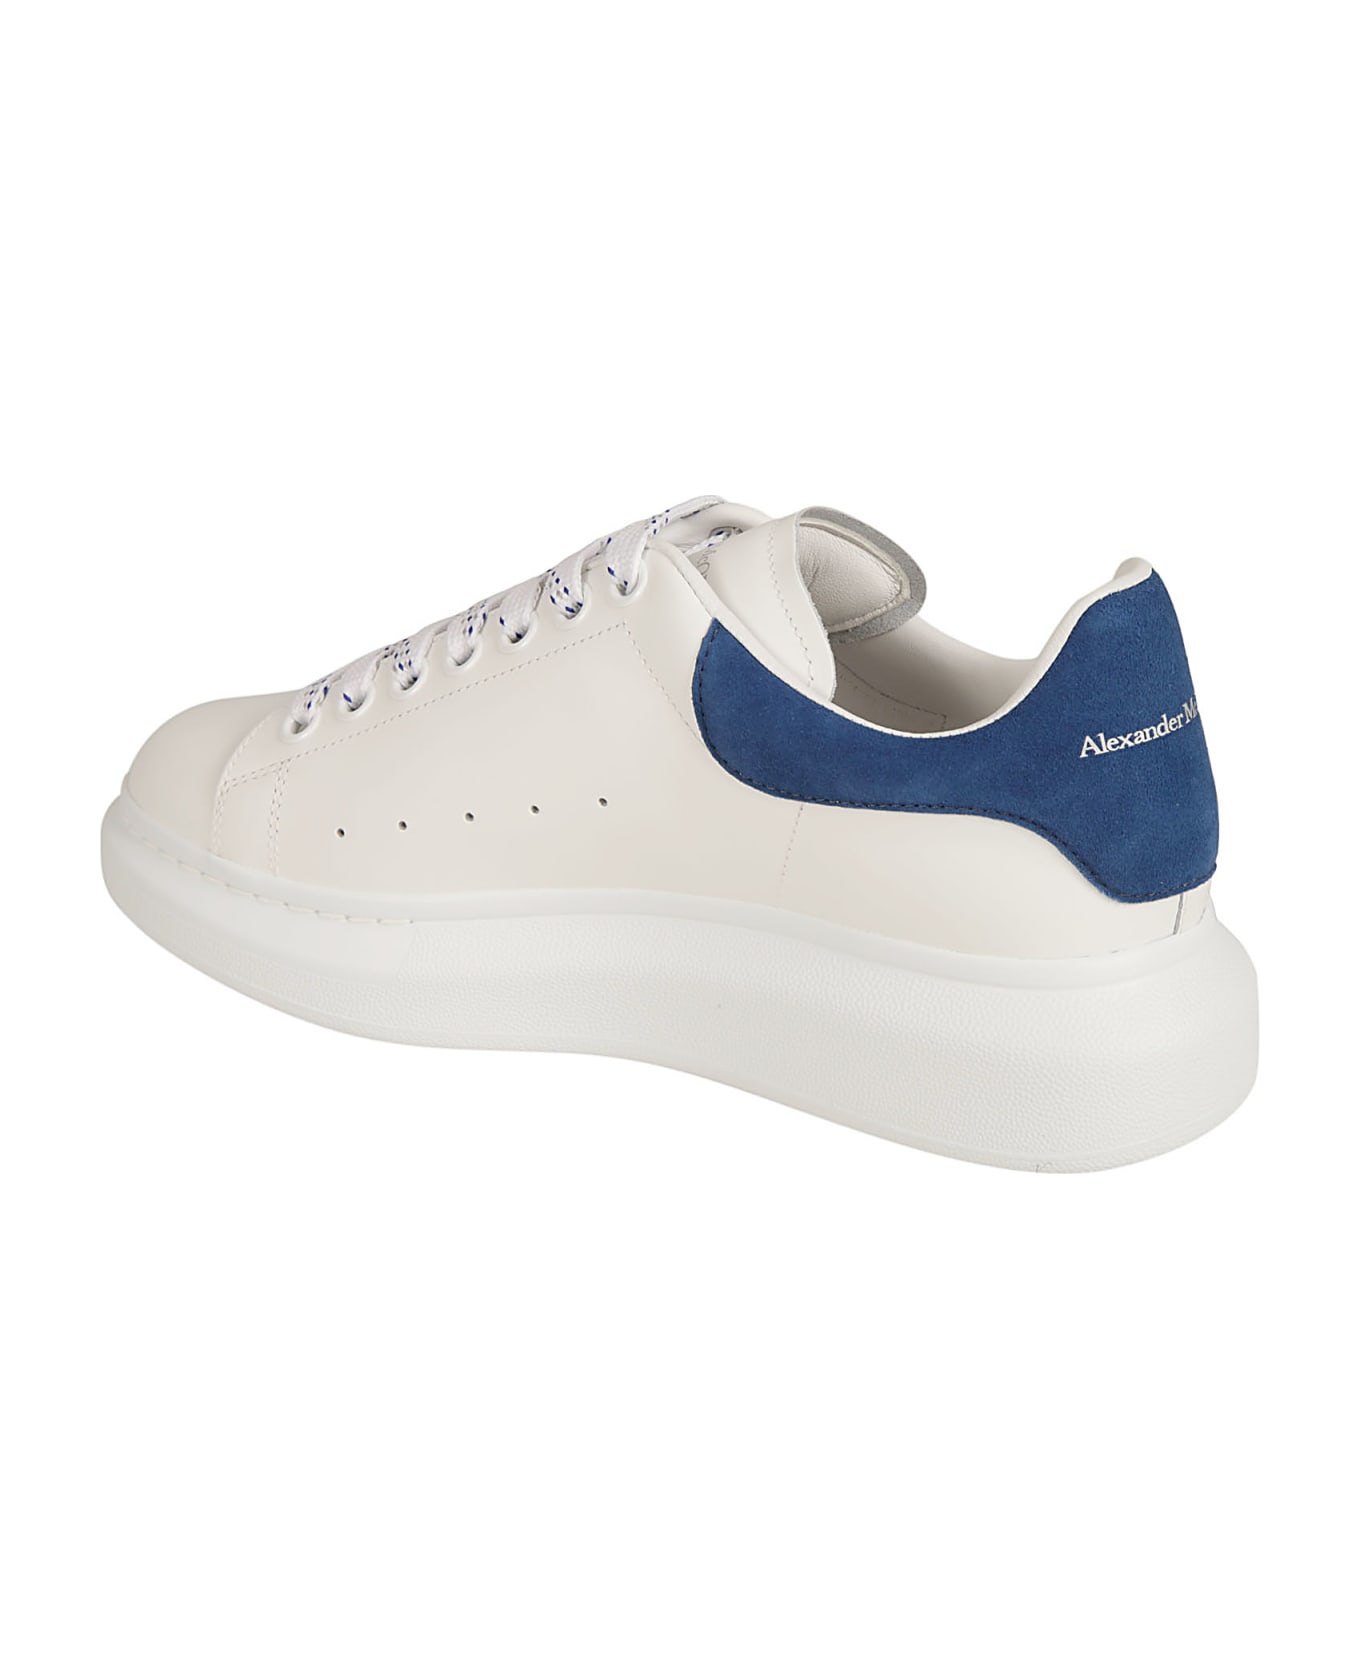 Alexander McQueen Larry Sneakers - White/Paris Blue